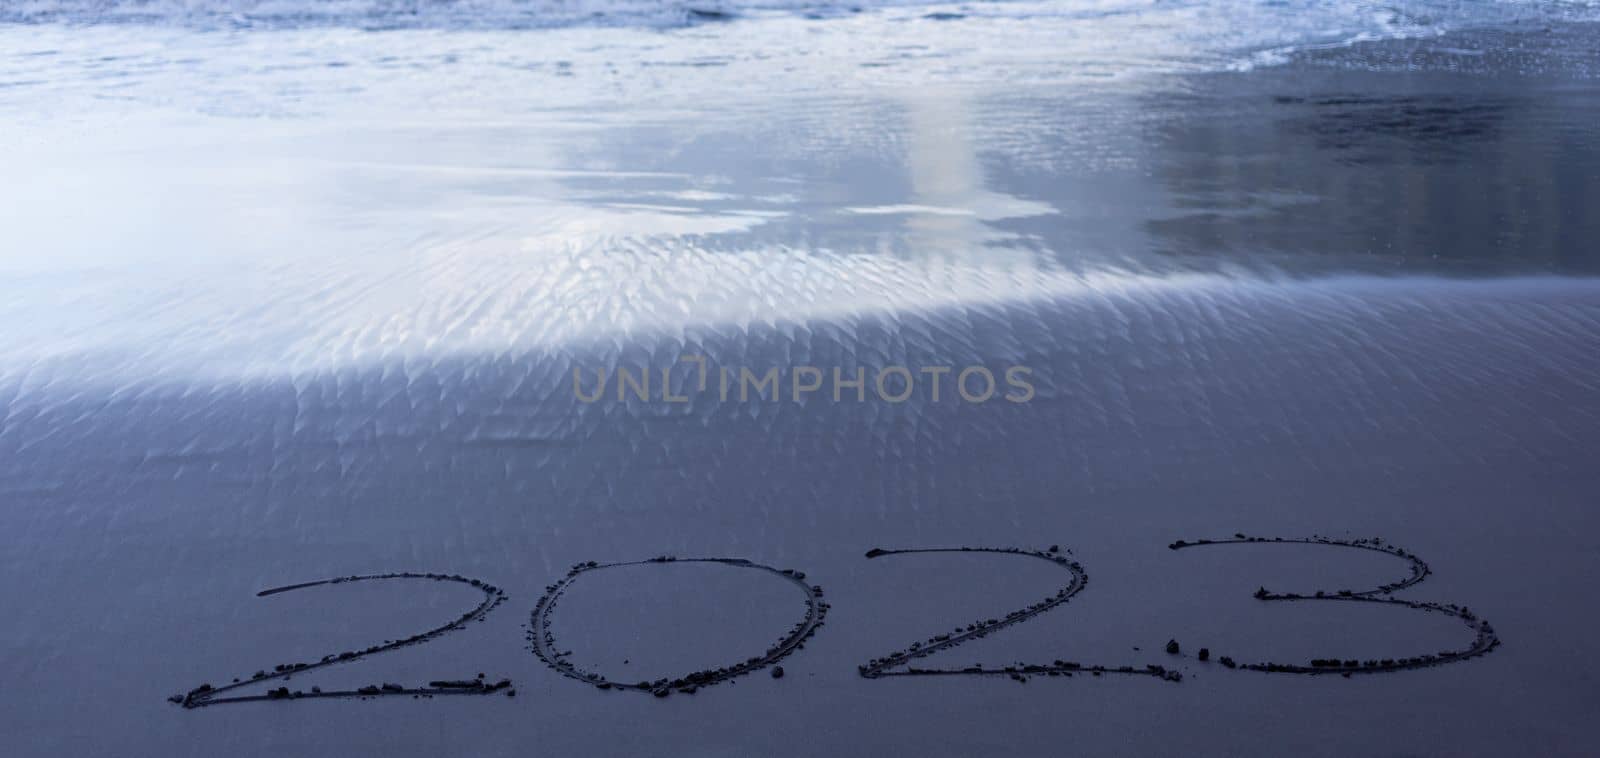 Year 2023 symbol written on black beach sand. High quality photo